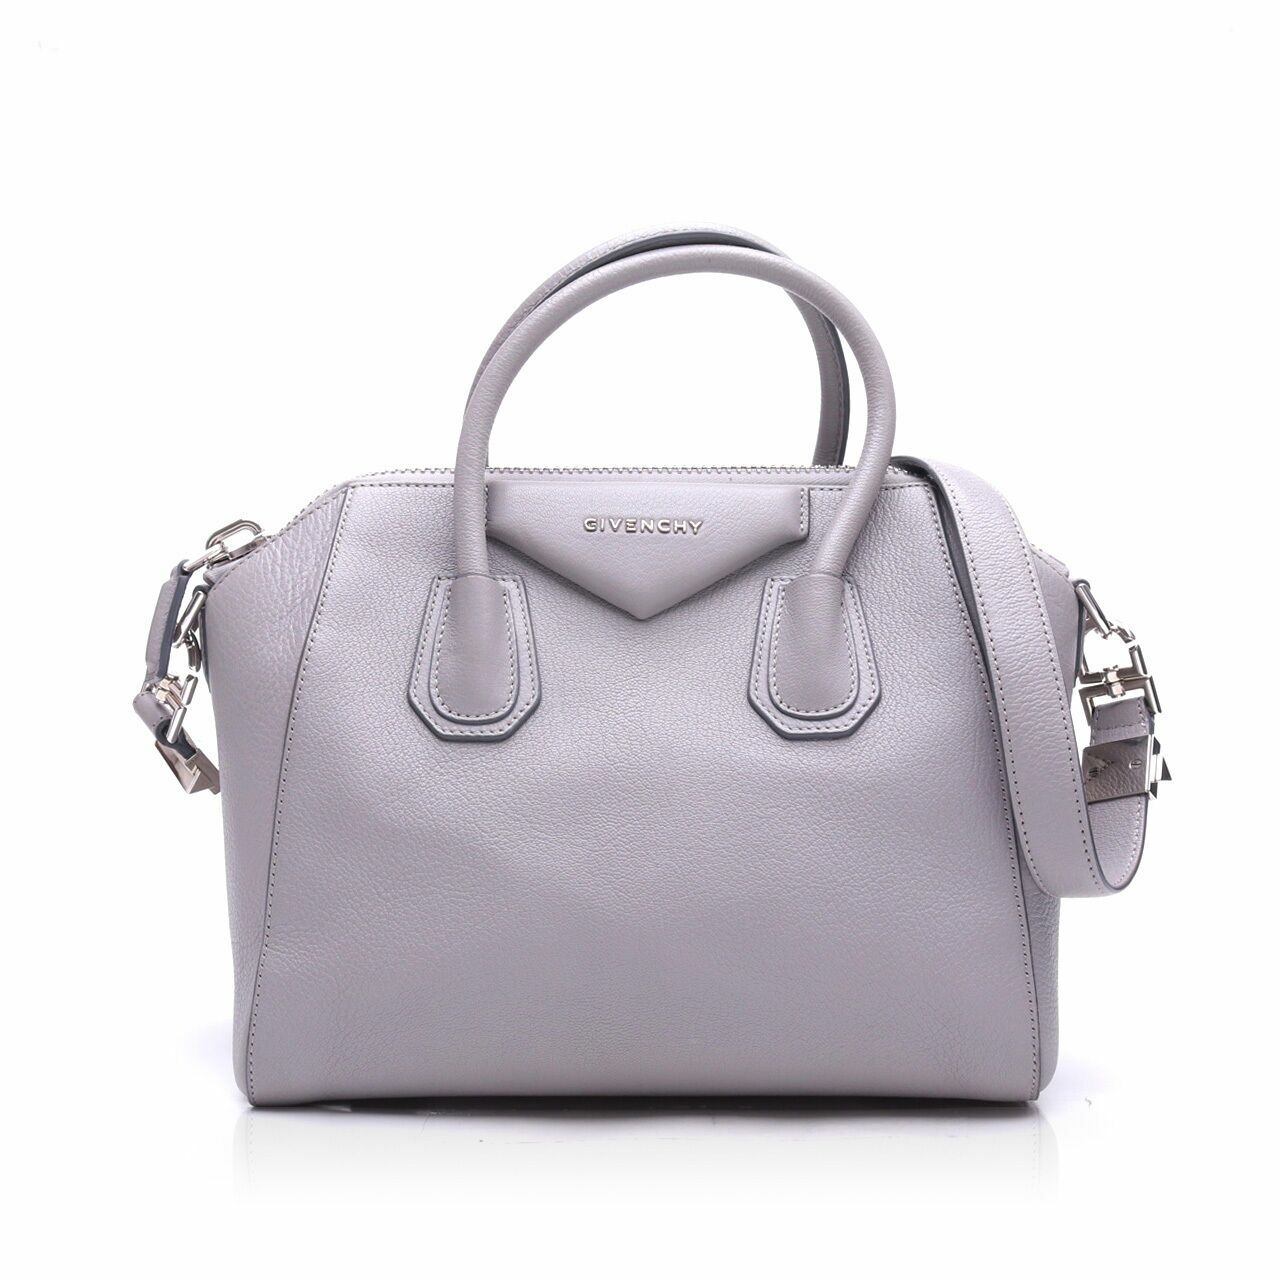 Givenchy Antigona Grey Satchel Bag